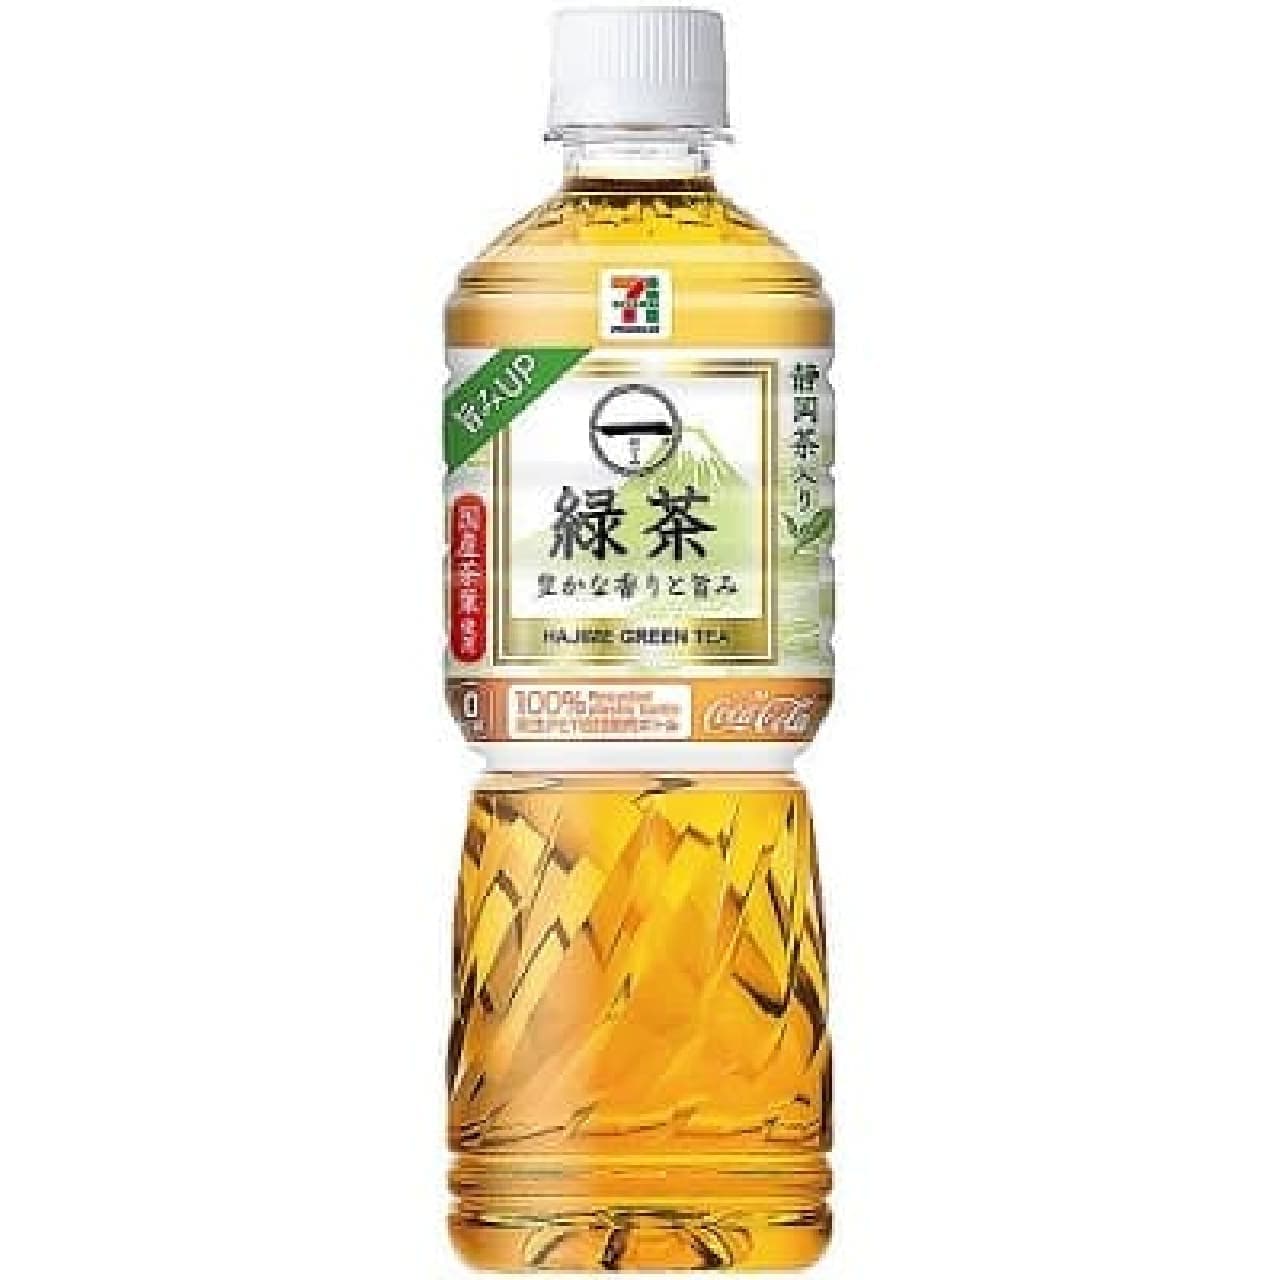 7-ELEVEN Hajime green tea with Shizuoka green tea 600ml